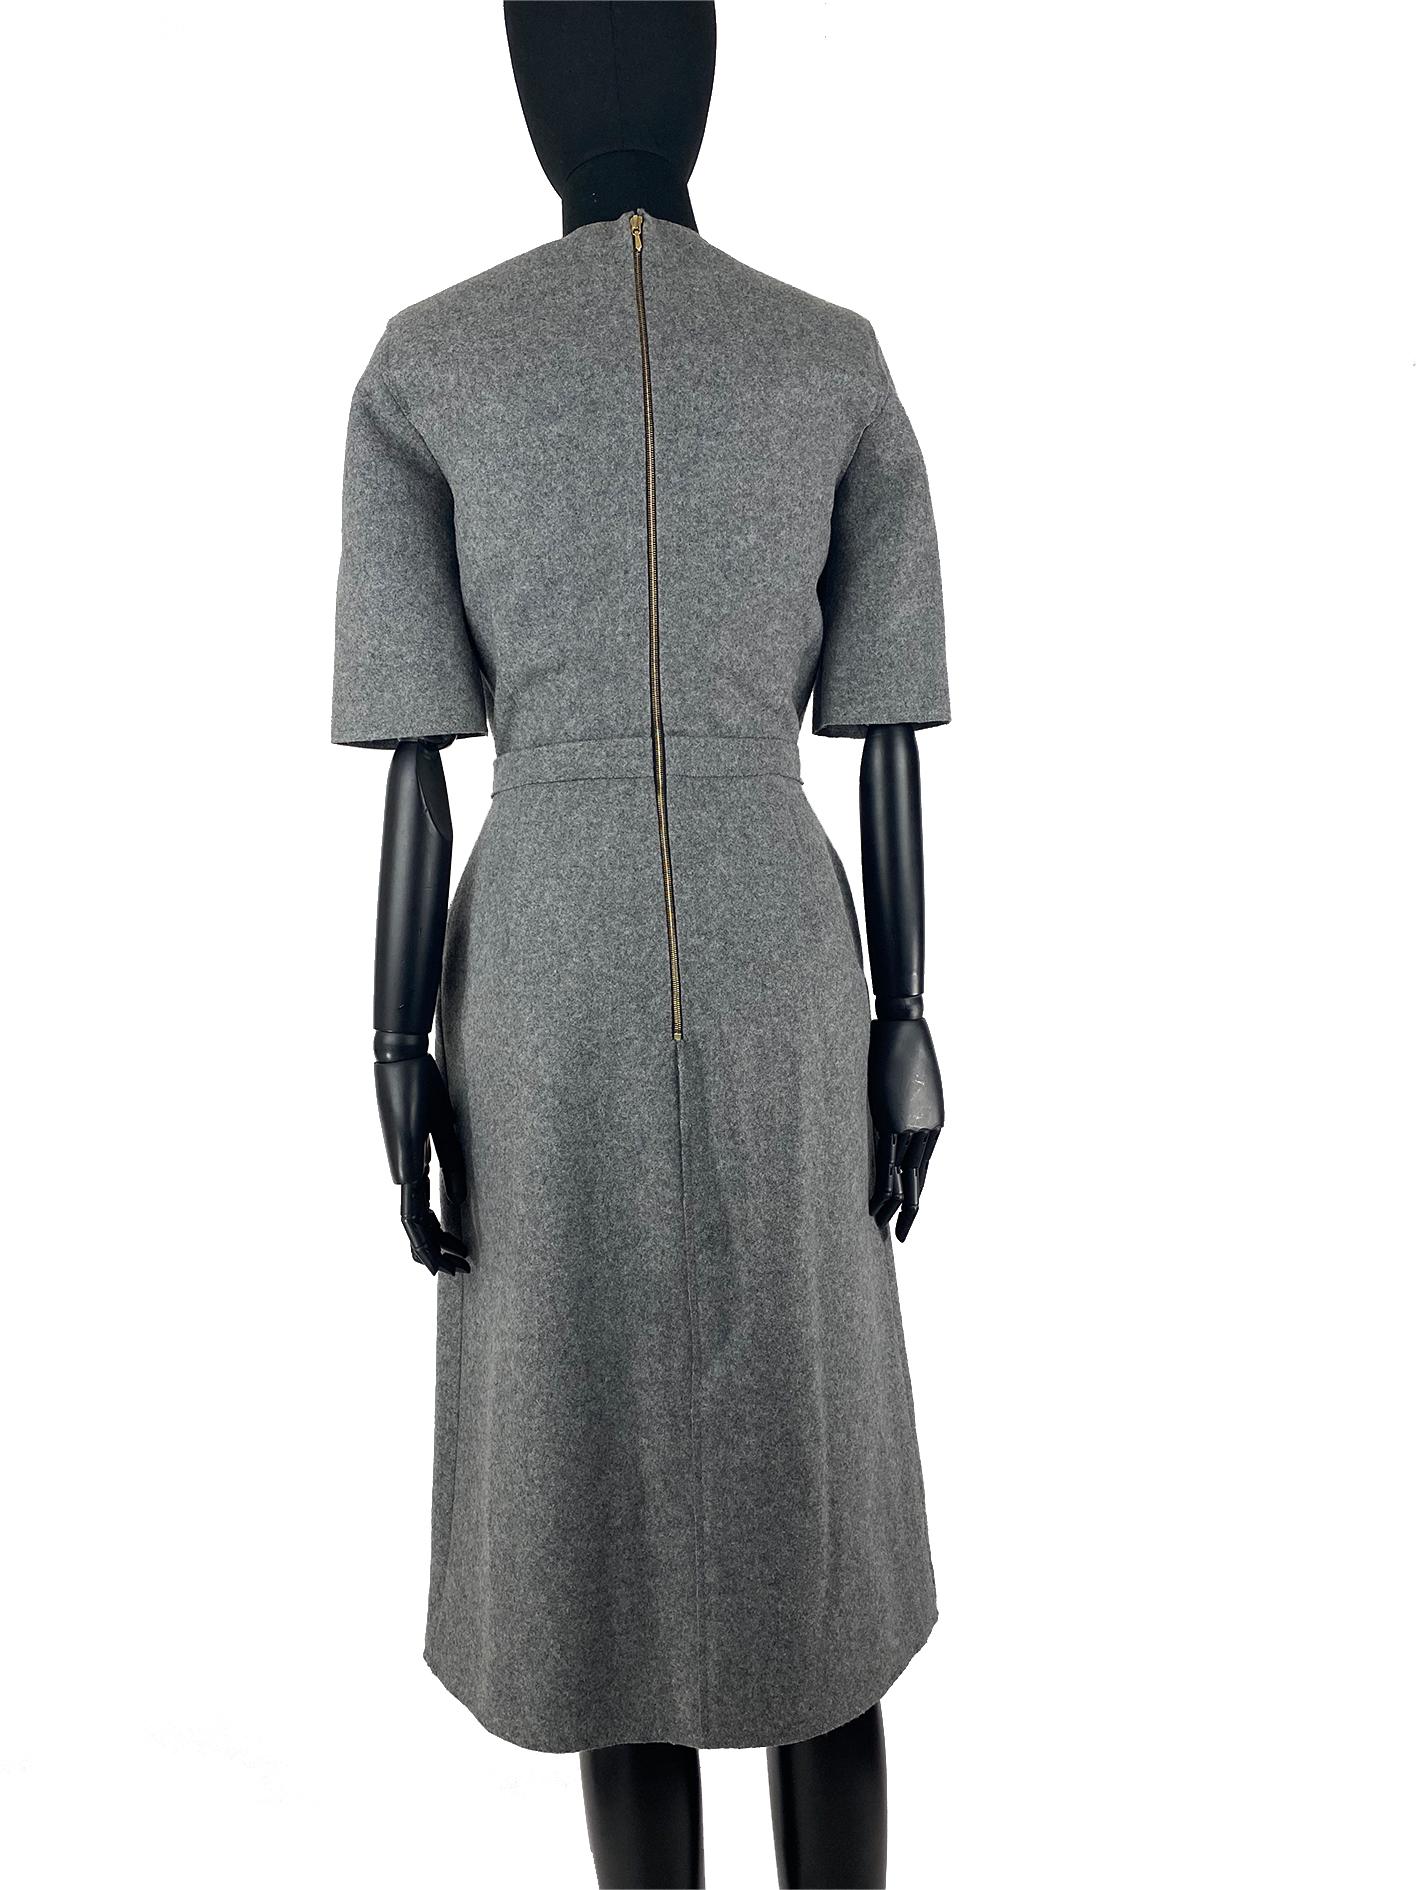 victoria beckham grey dress